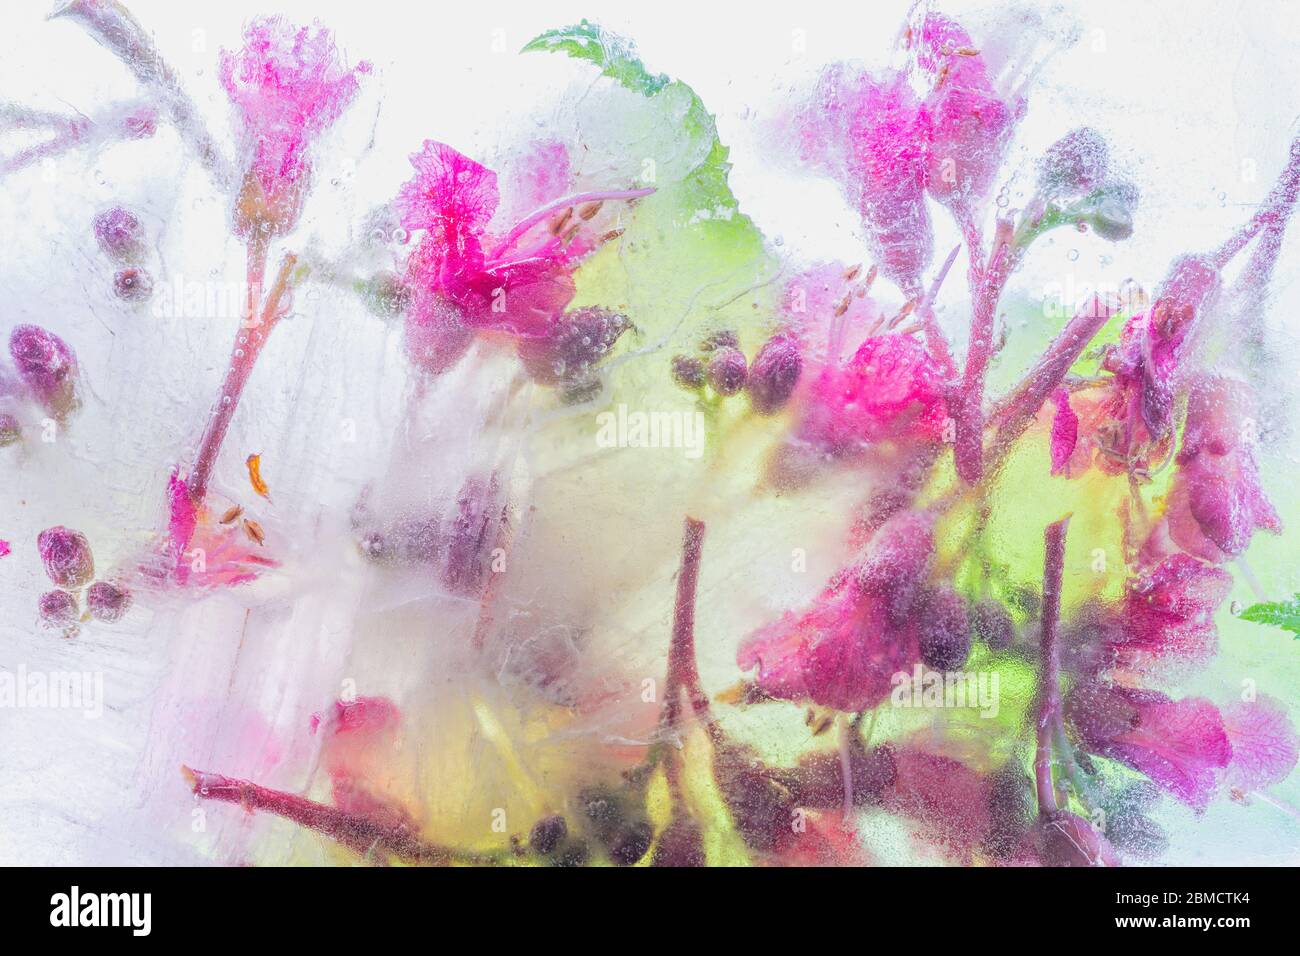 Gefrorene rosa Kastanienblüte - kreative florale Hintergrund Stockfoto